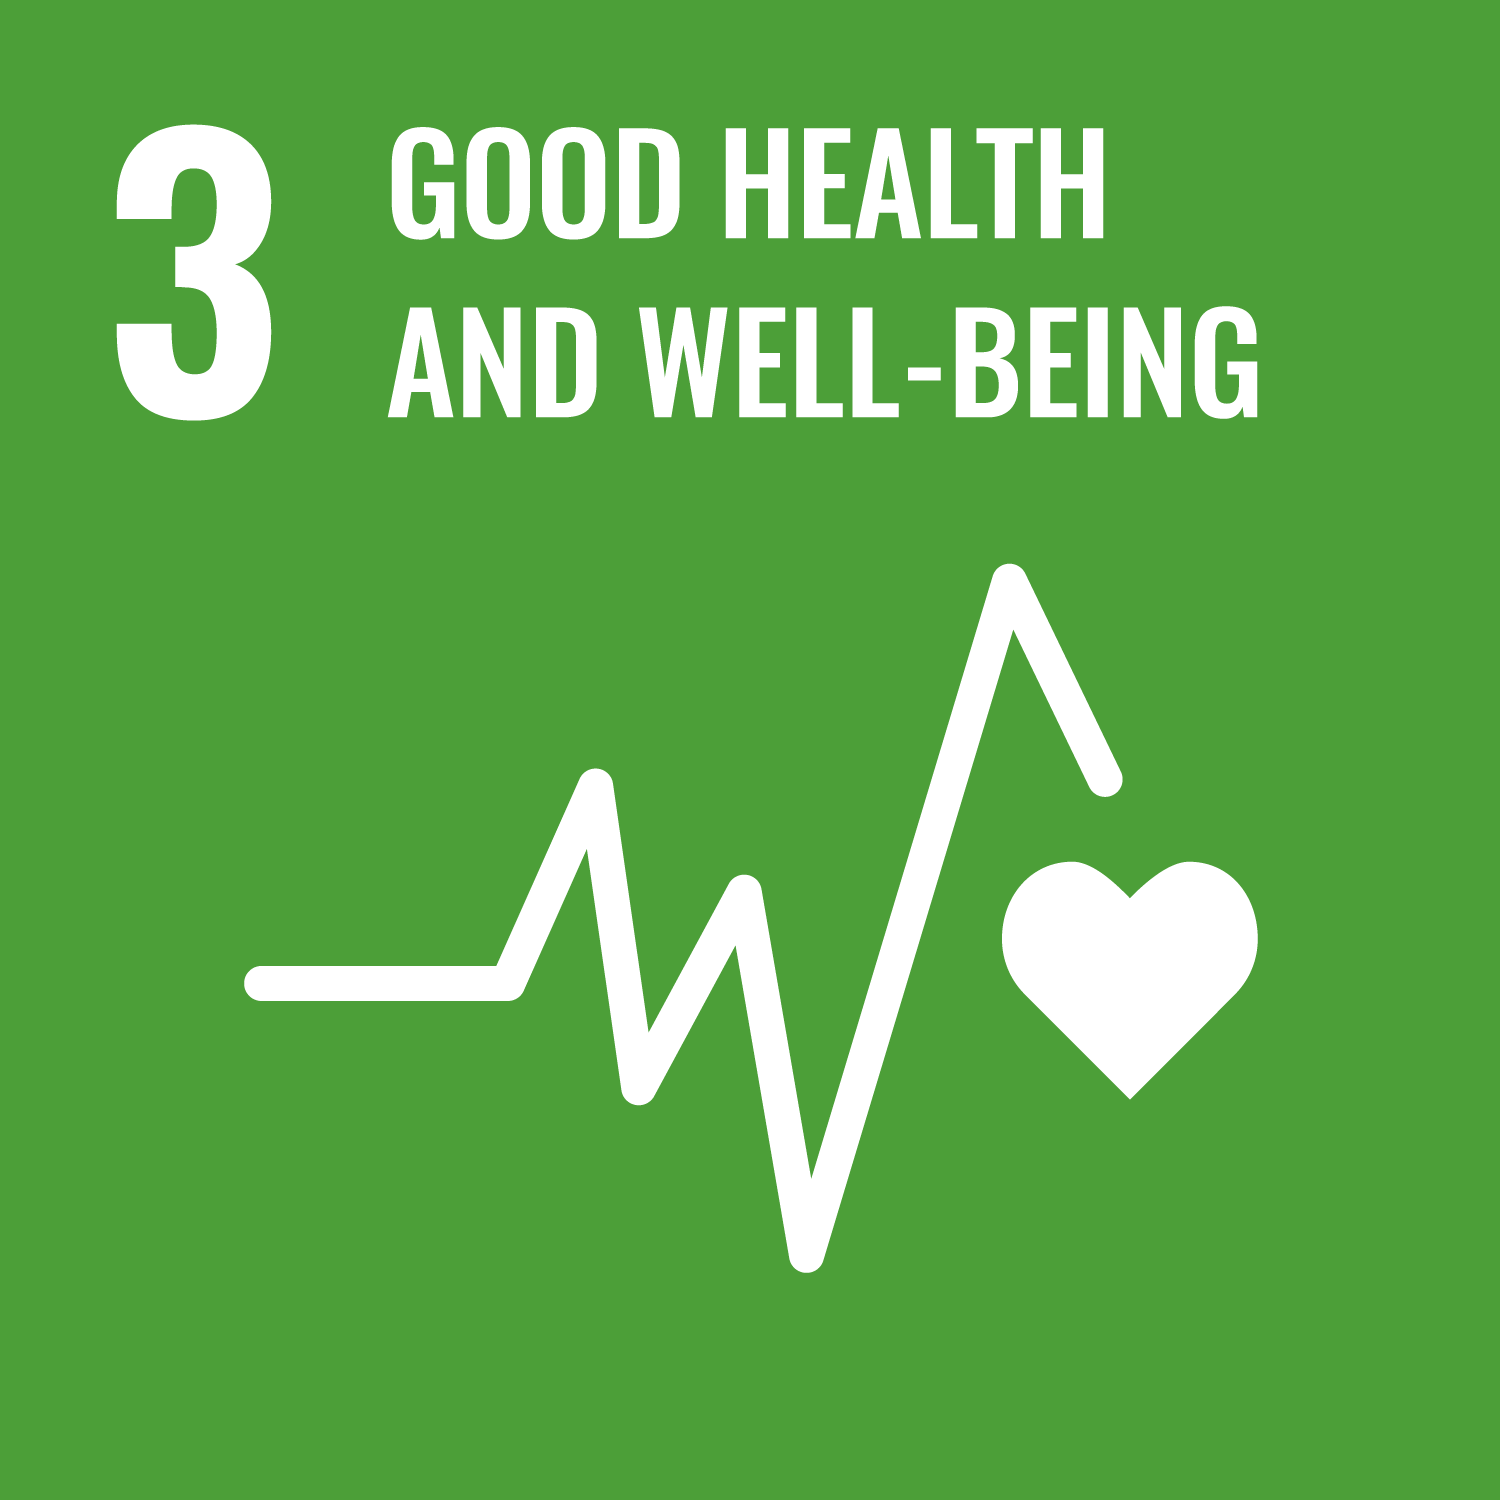 3. Good Health